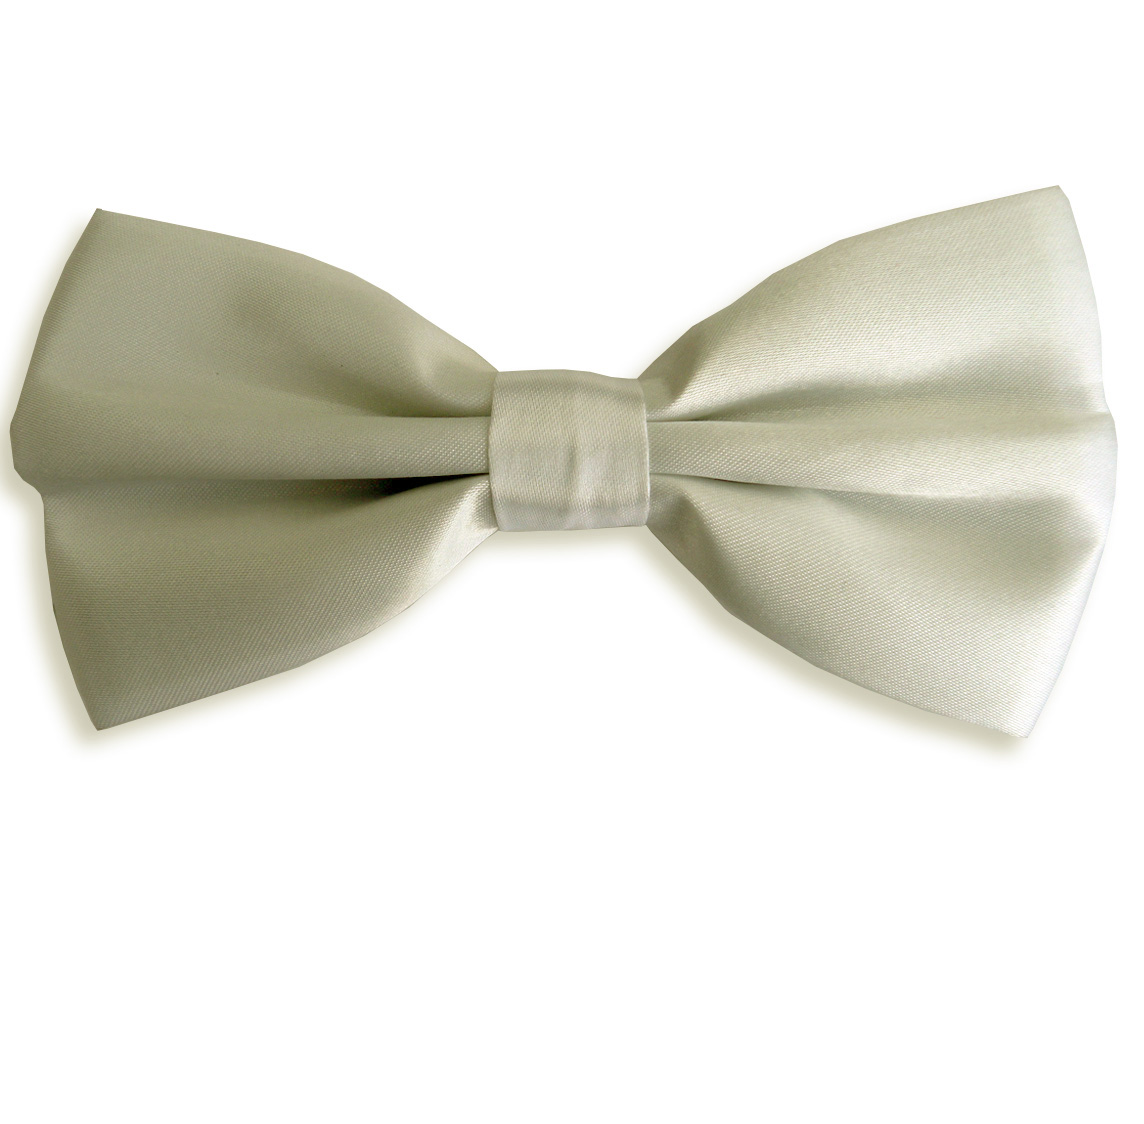 Ivory Bow Tie - The Tie Rack Australia | Shop Online | Bow Ties, Ties ...